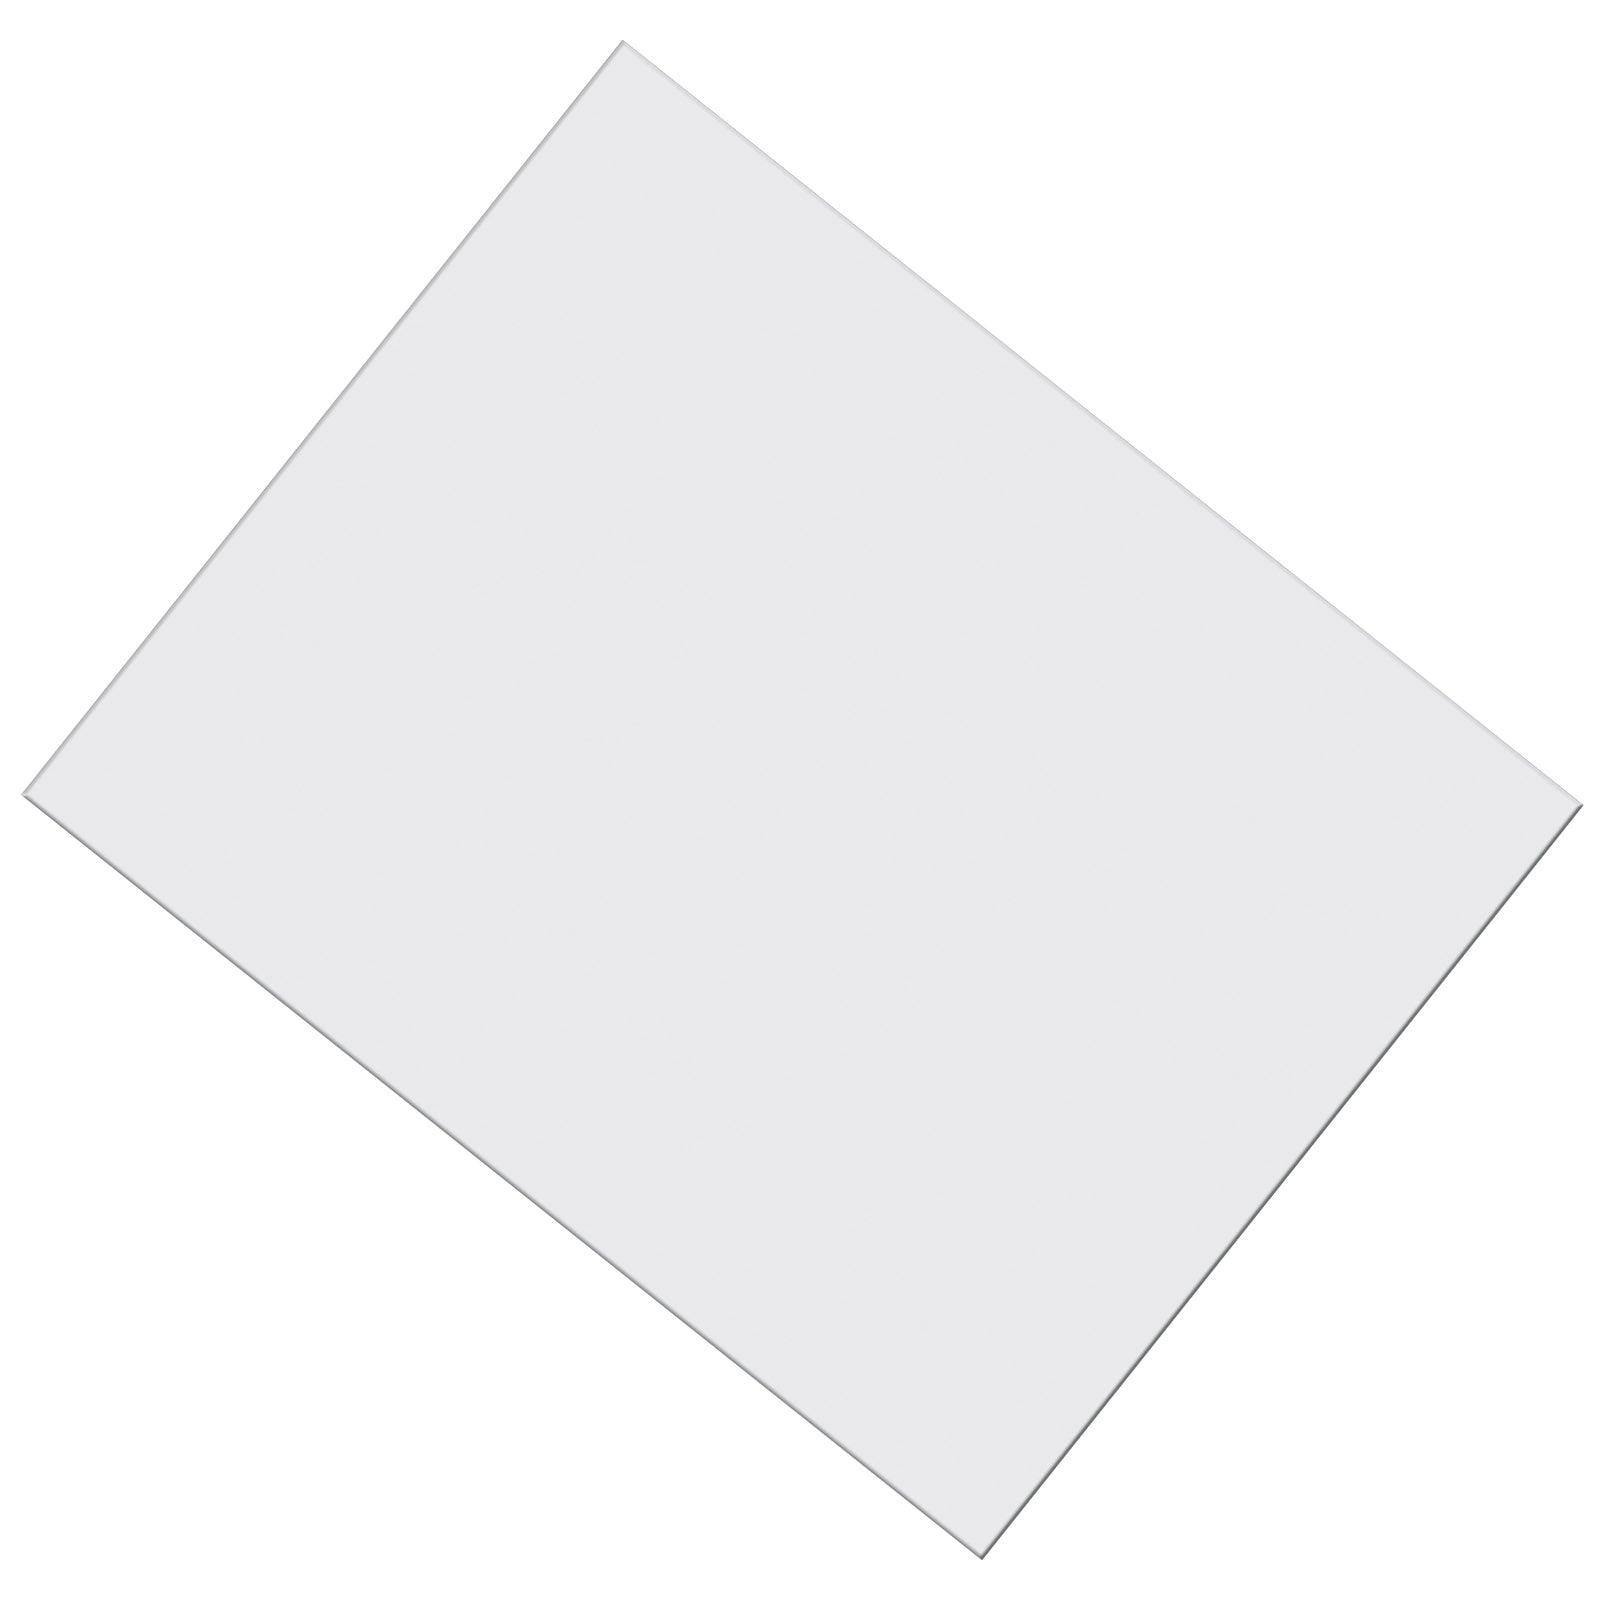 Premium Poster Board, White, 22" x 28", 25 Sheets - Loomini